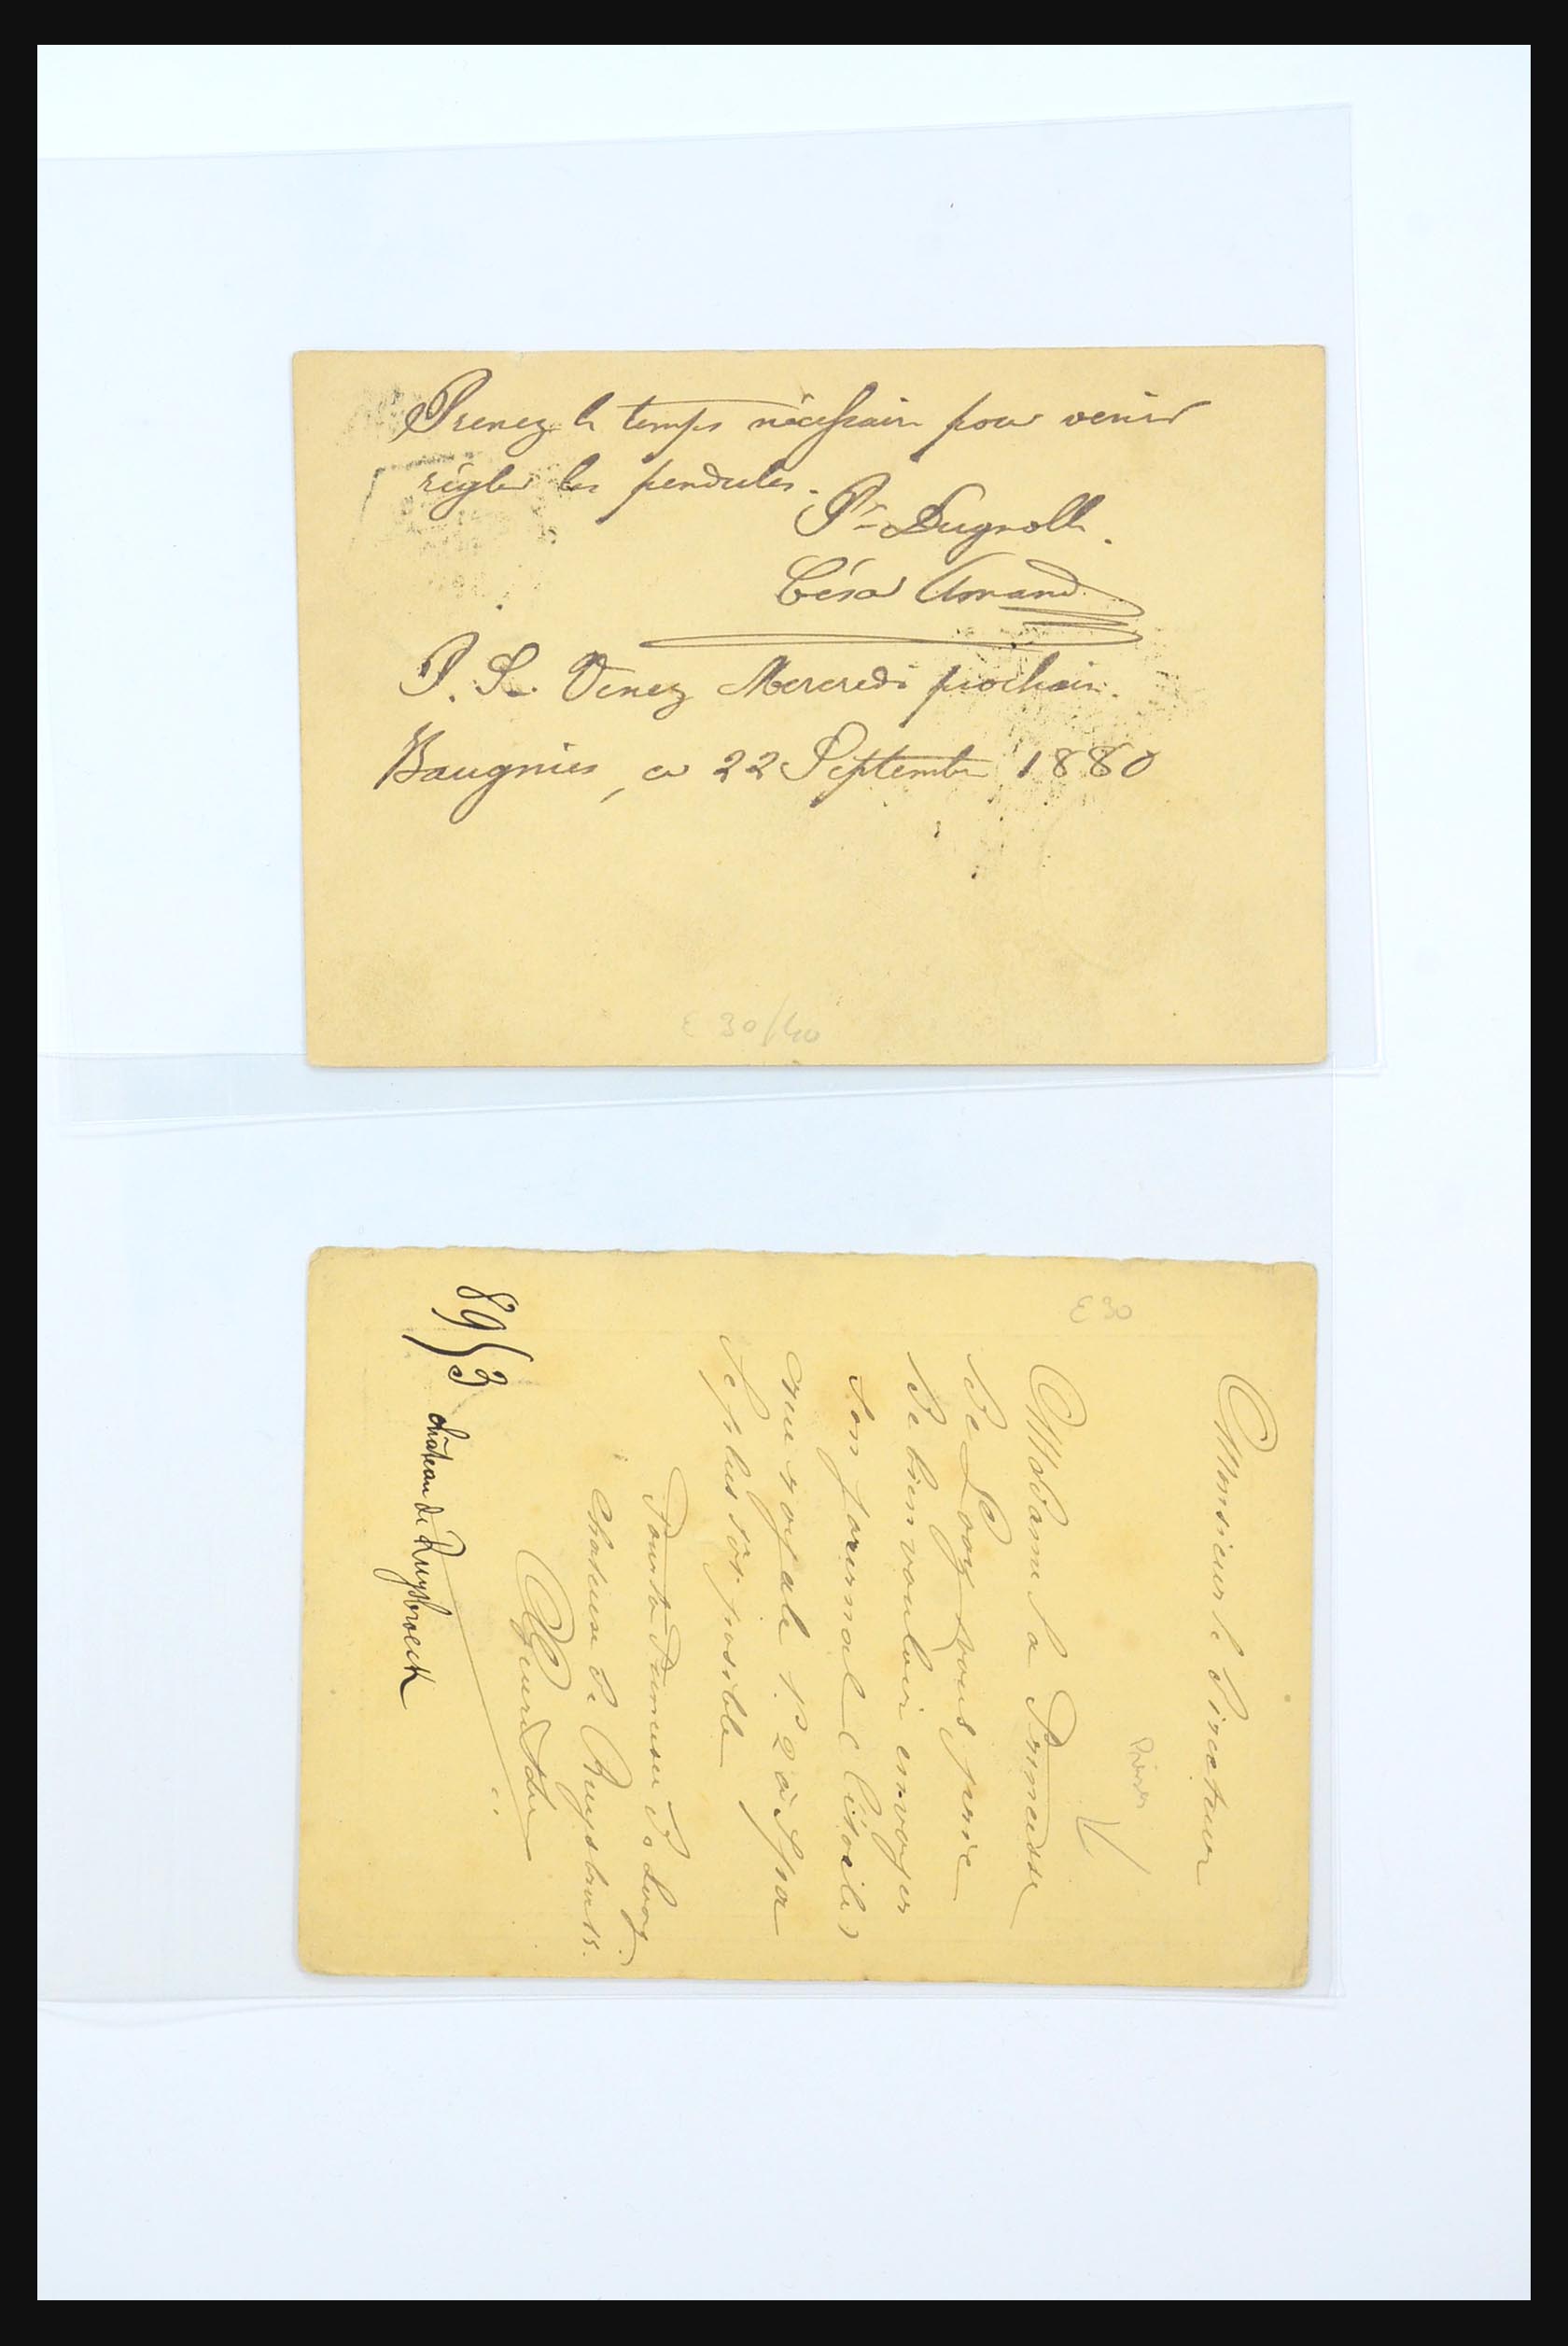 31356 485 - 31356 België en koloniën brieven 1850-1960.